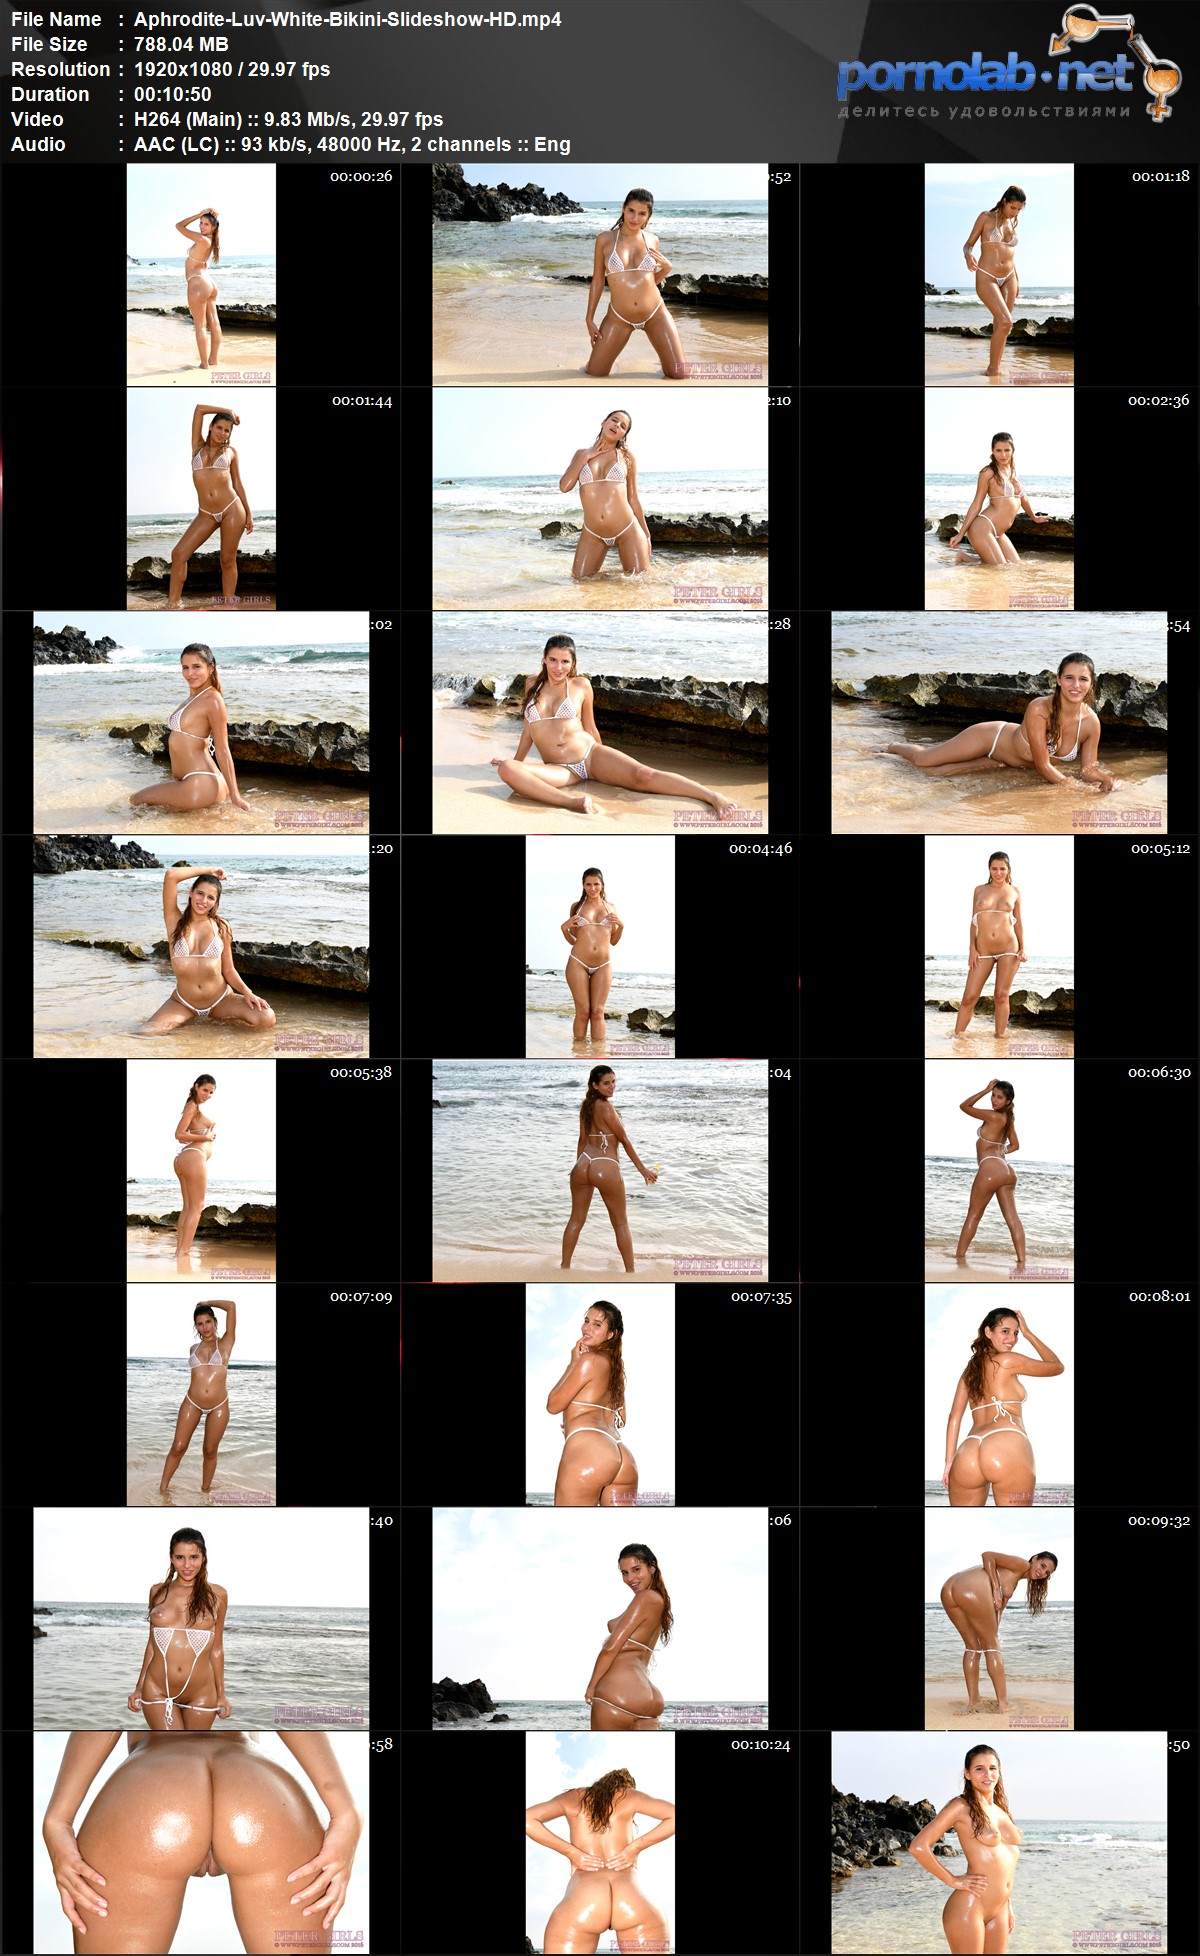 Aphrodite Luv White Bikini Slideshow HD mp 4